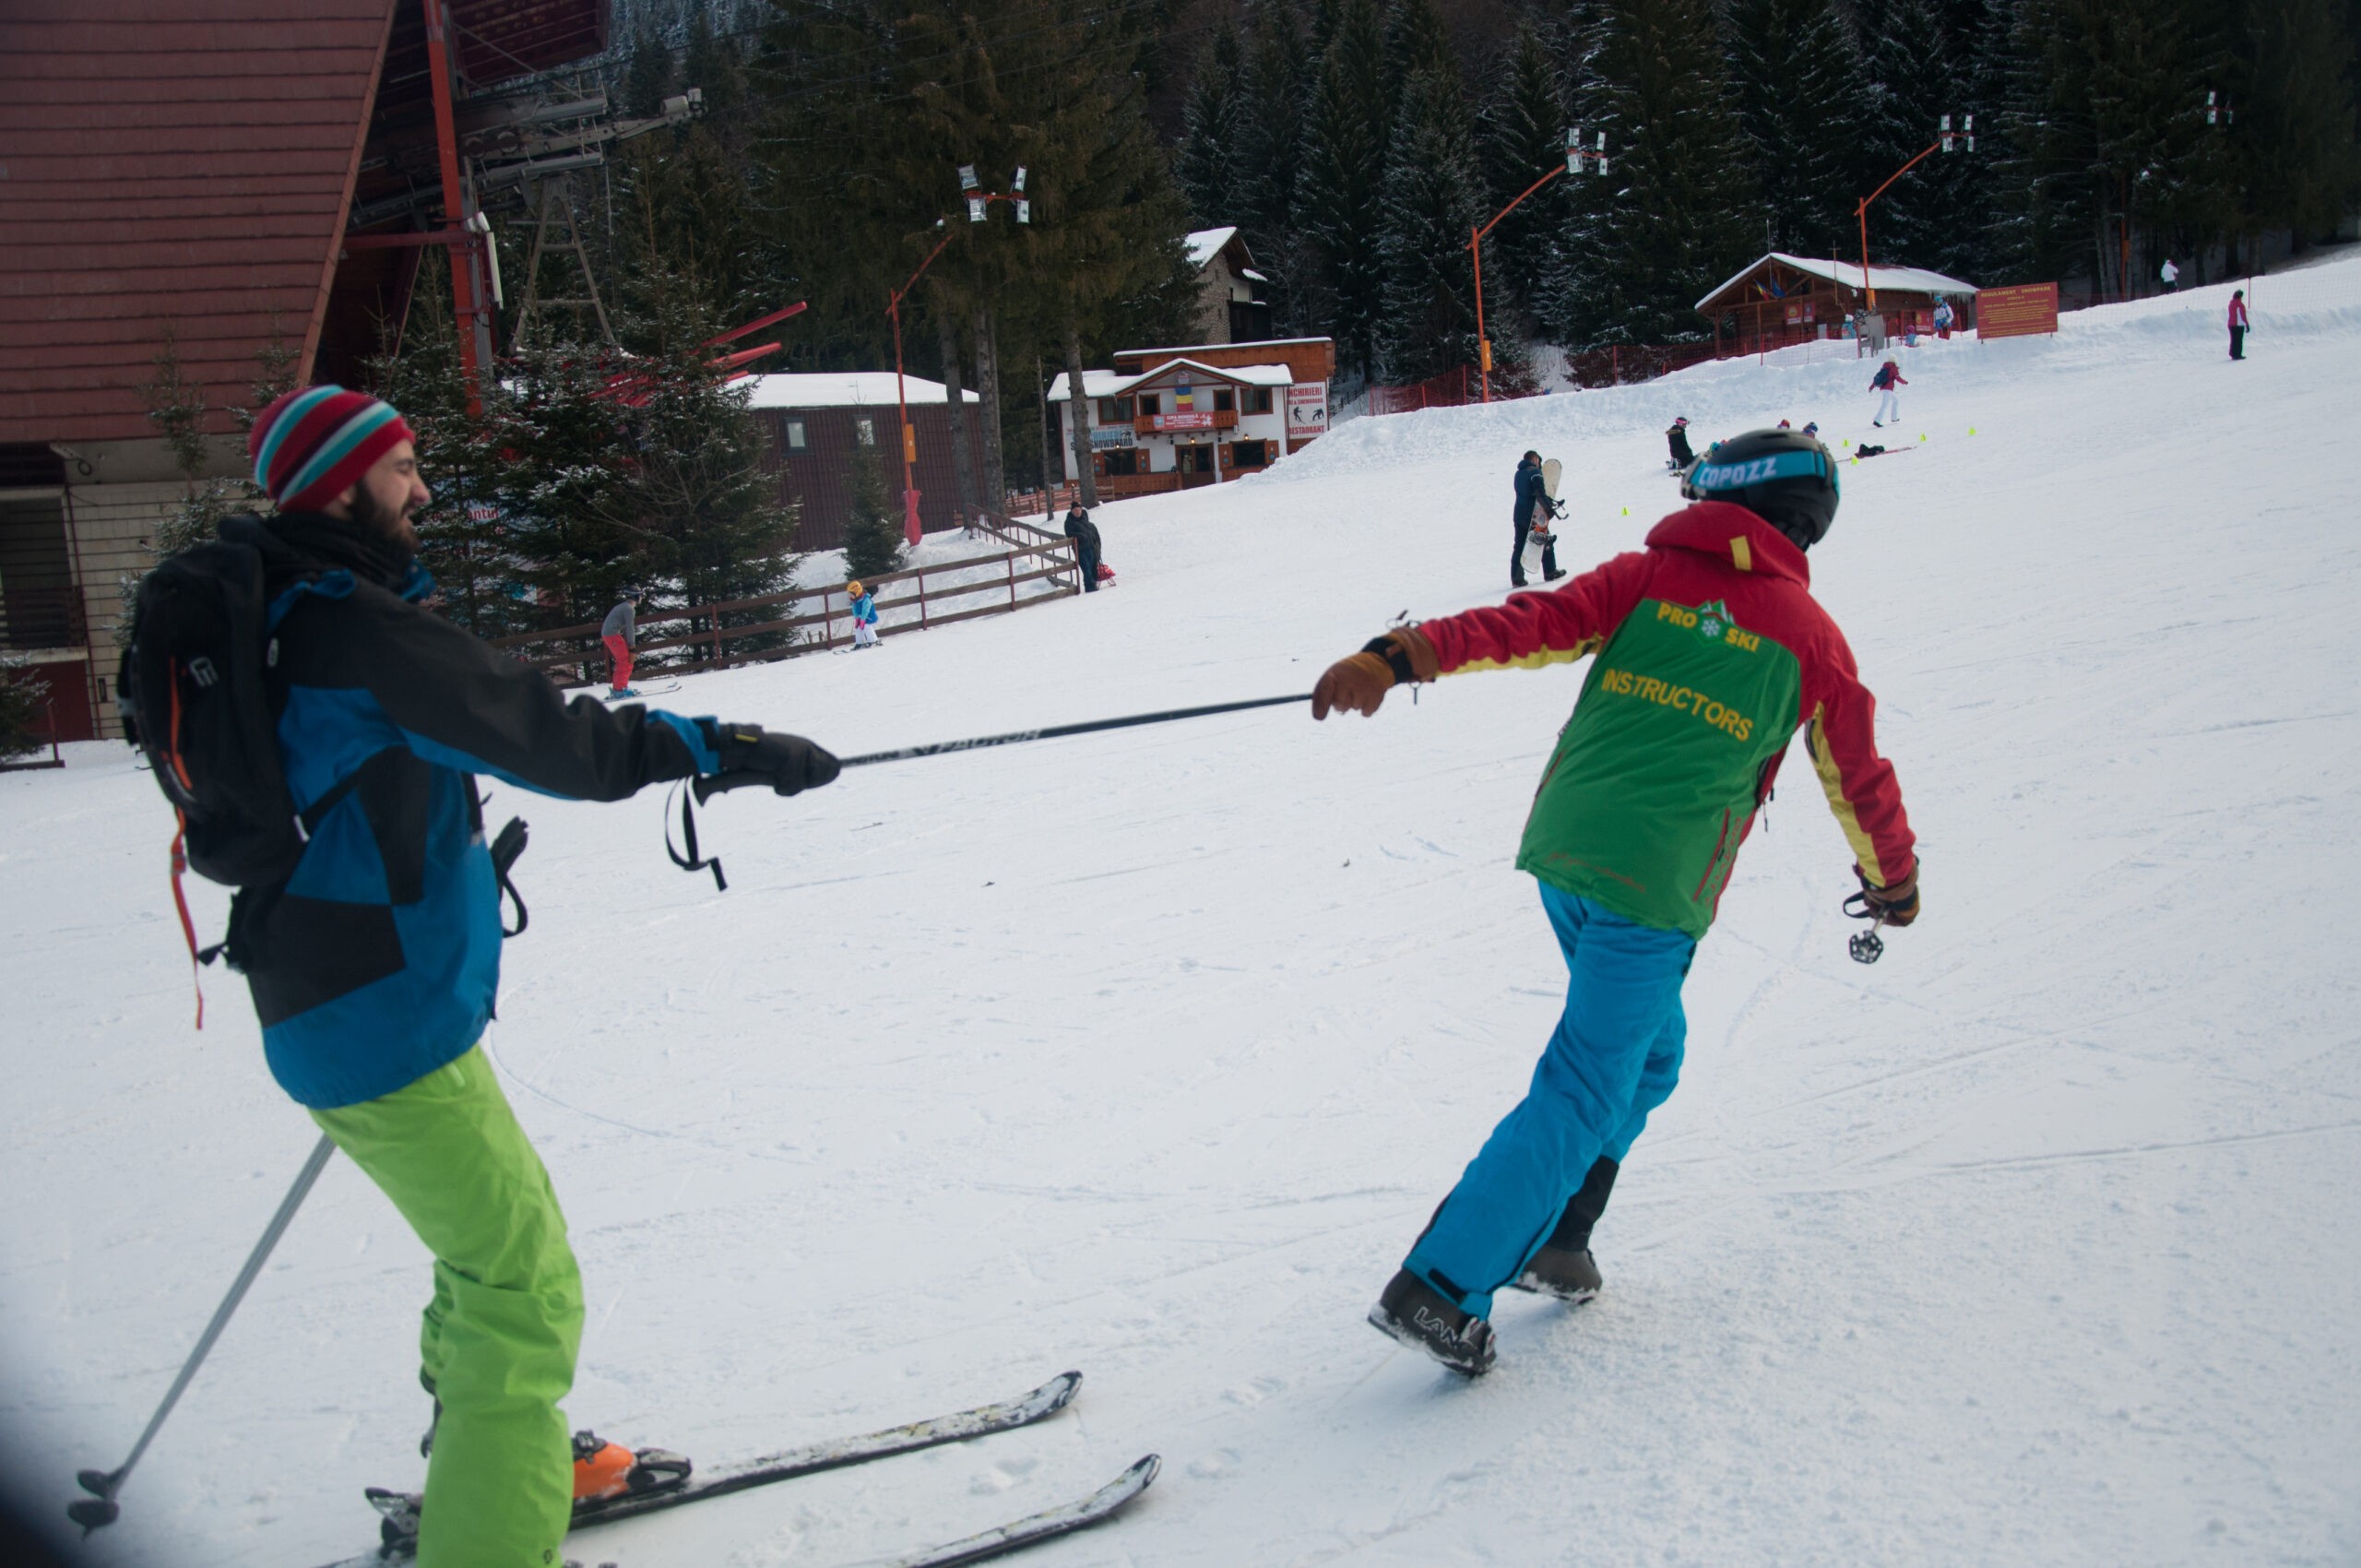 Instructorul de ski invata urcarea pe teleski